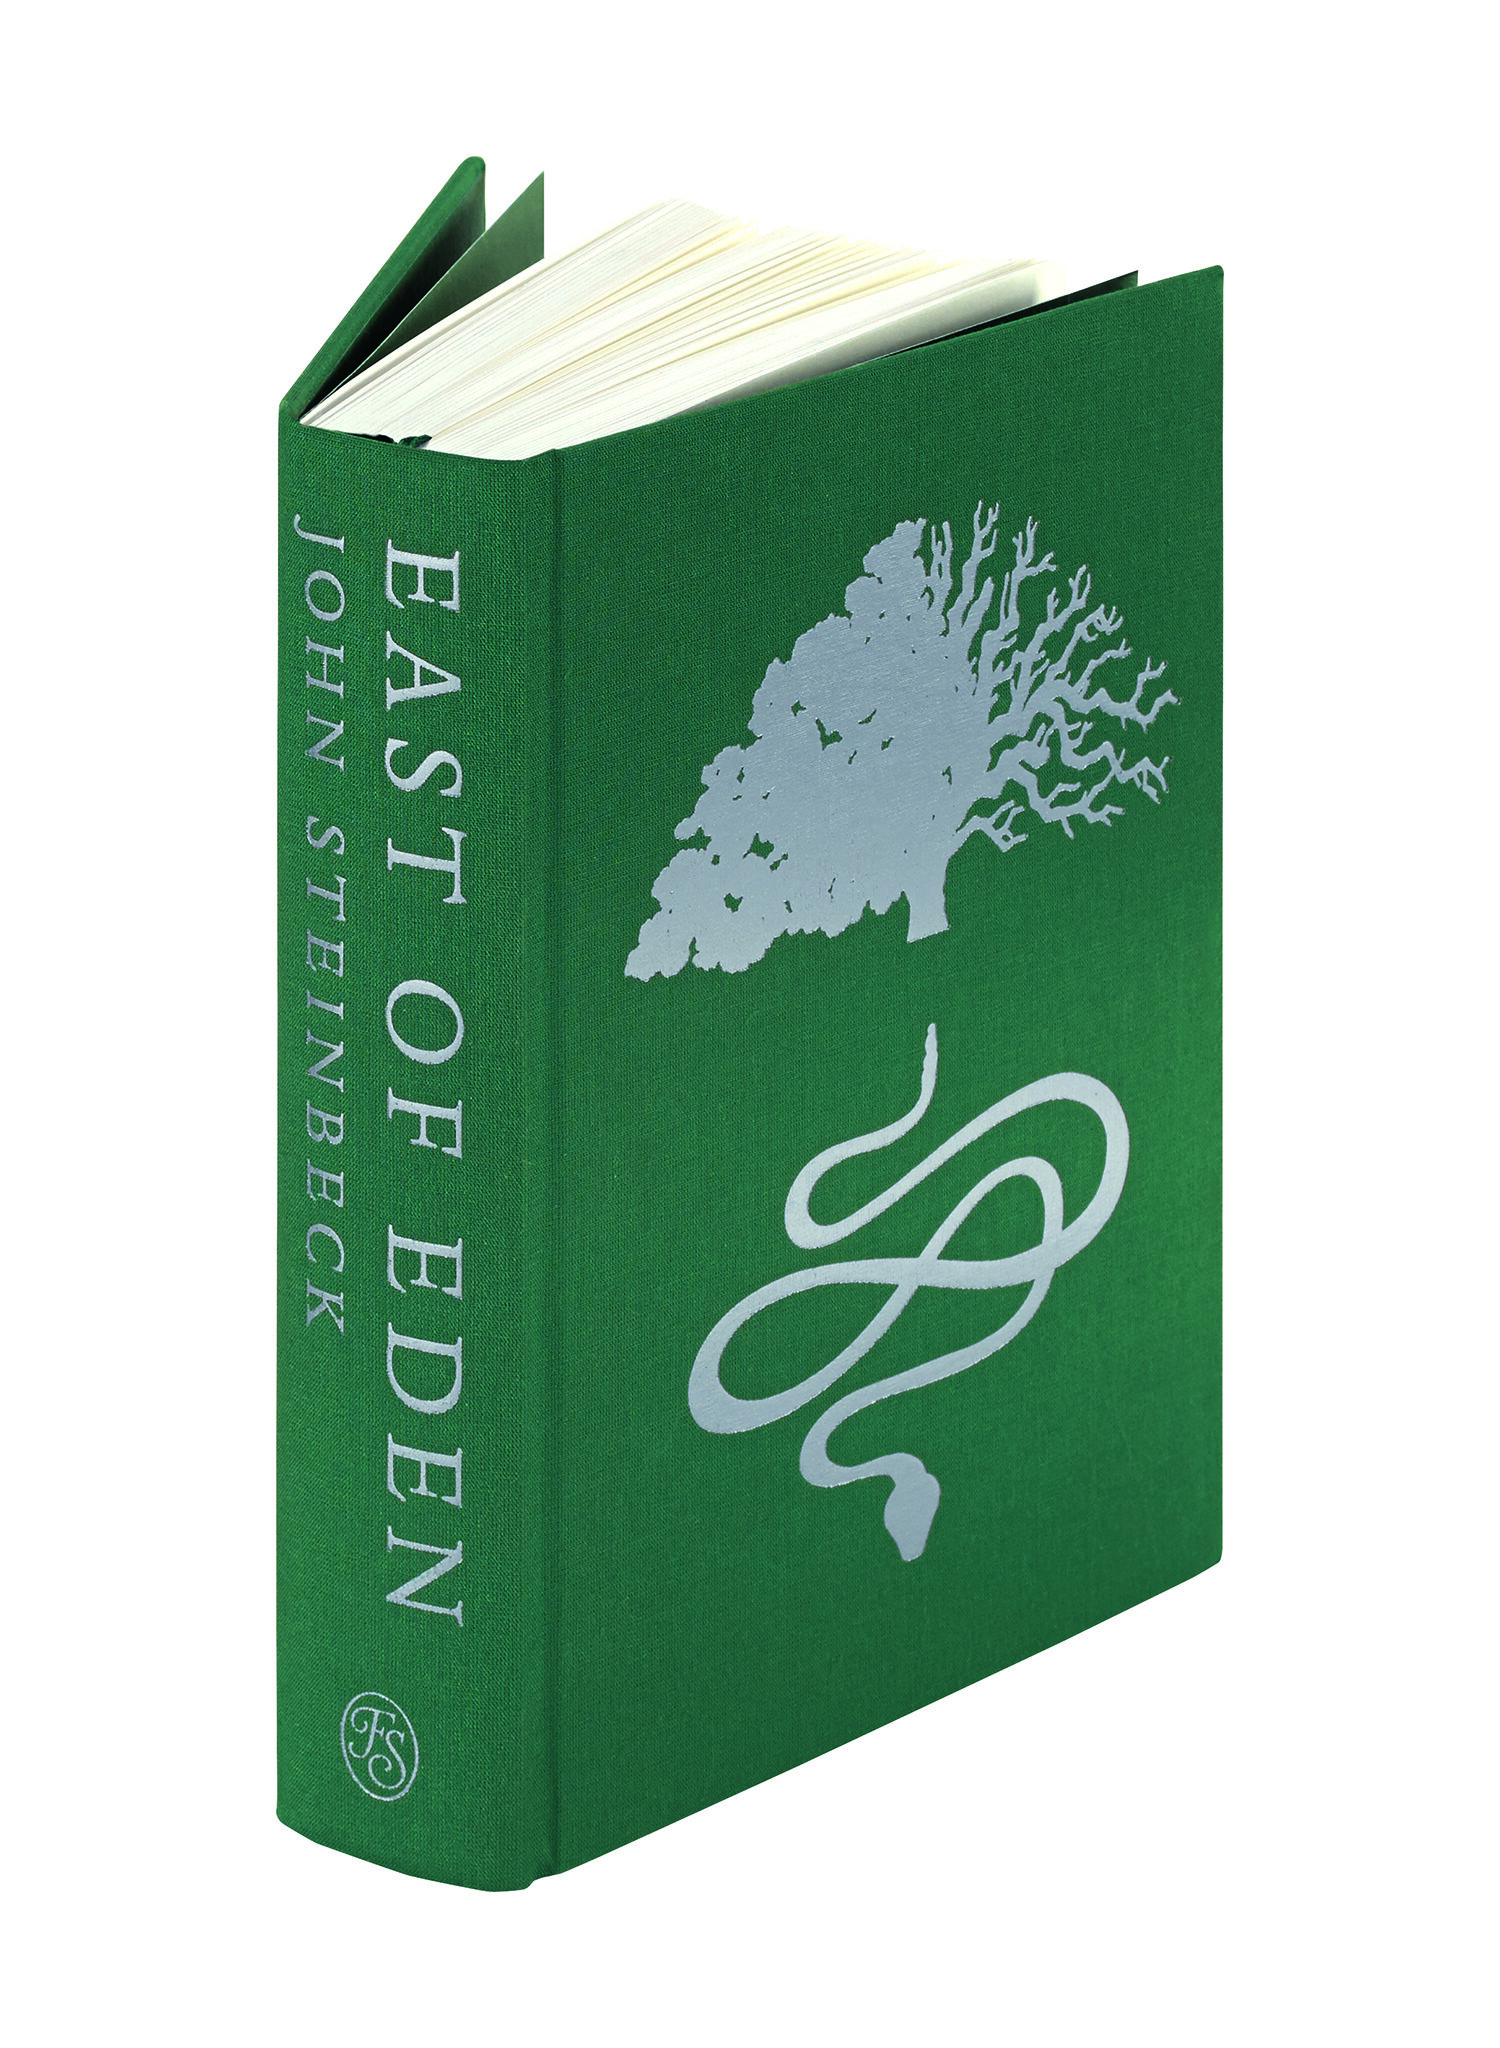 East of Eden | The Folio Society